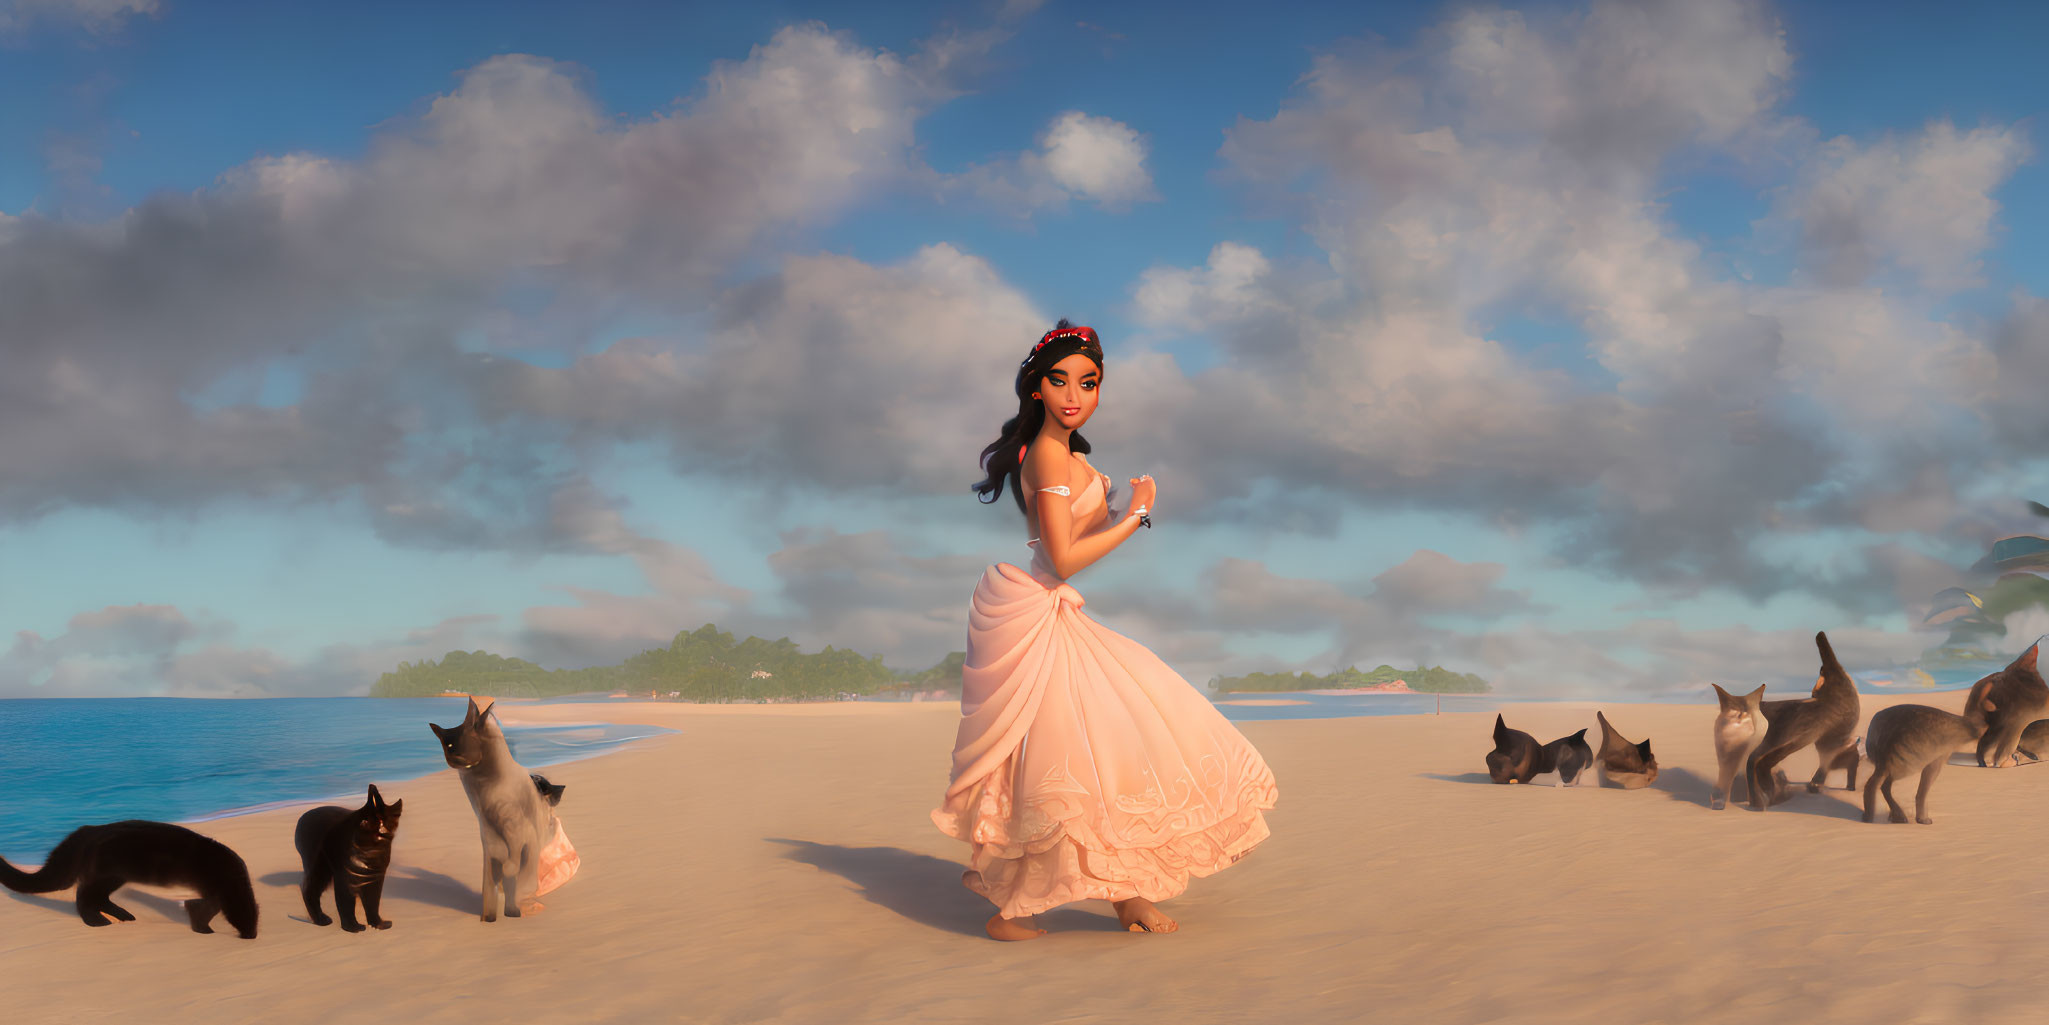 Polynesian girl with long hair on beach with cats under cloudy sky